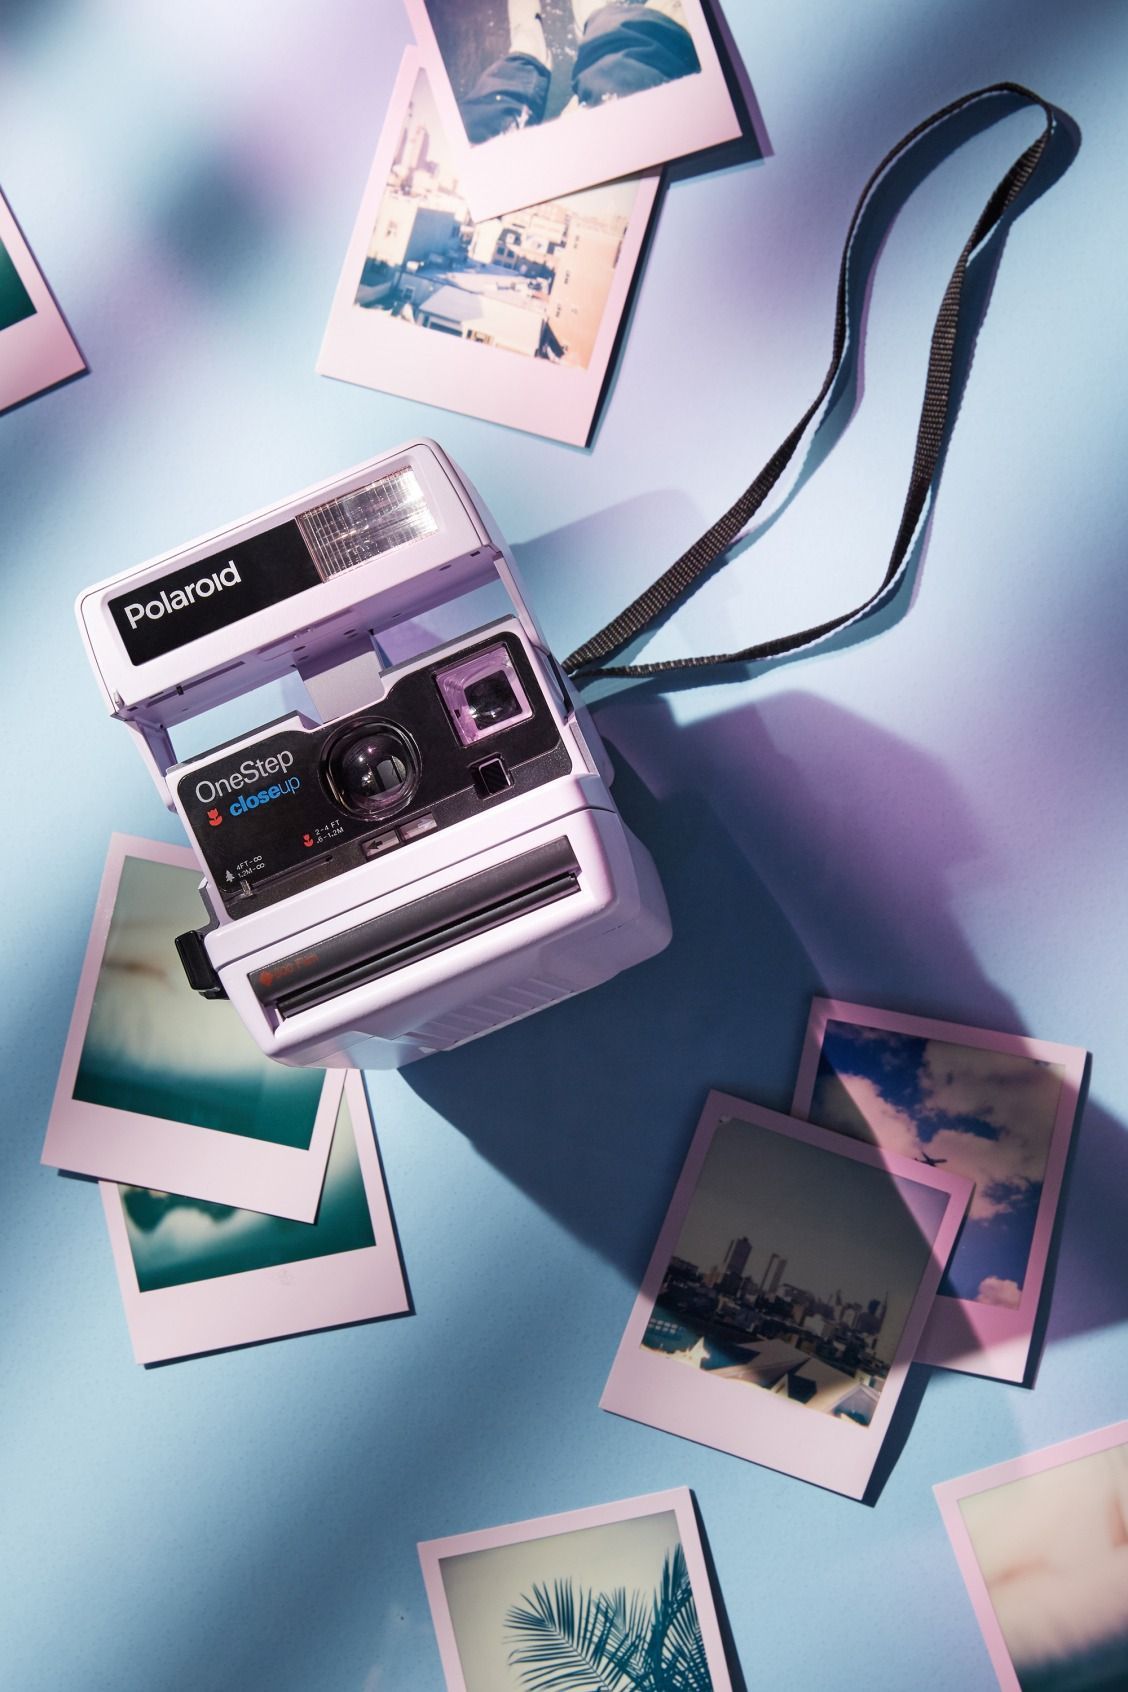 Polaroid camera with instant photos on a blue background - Polaroid